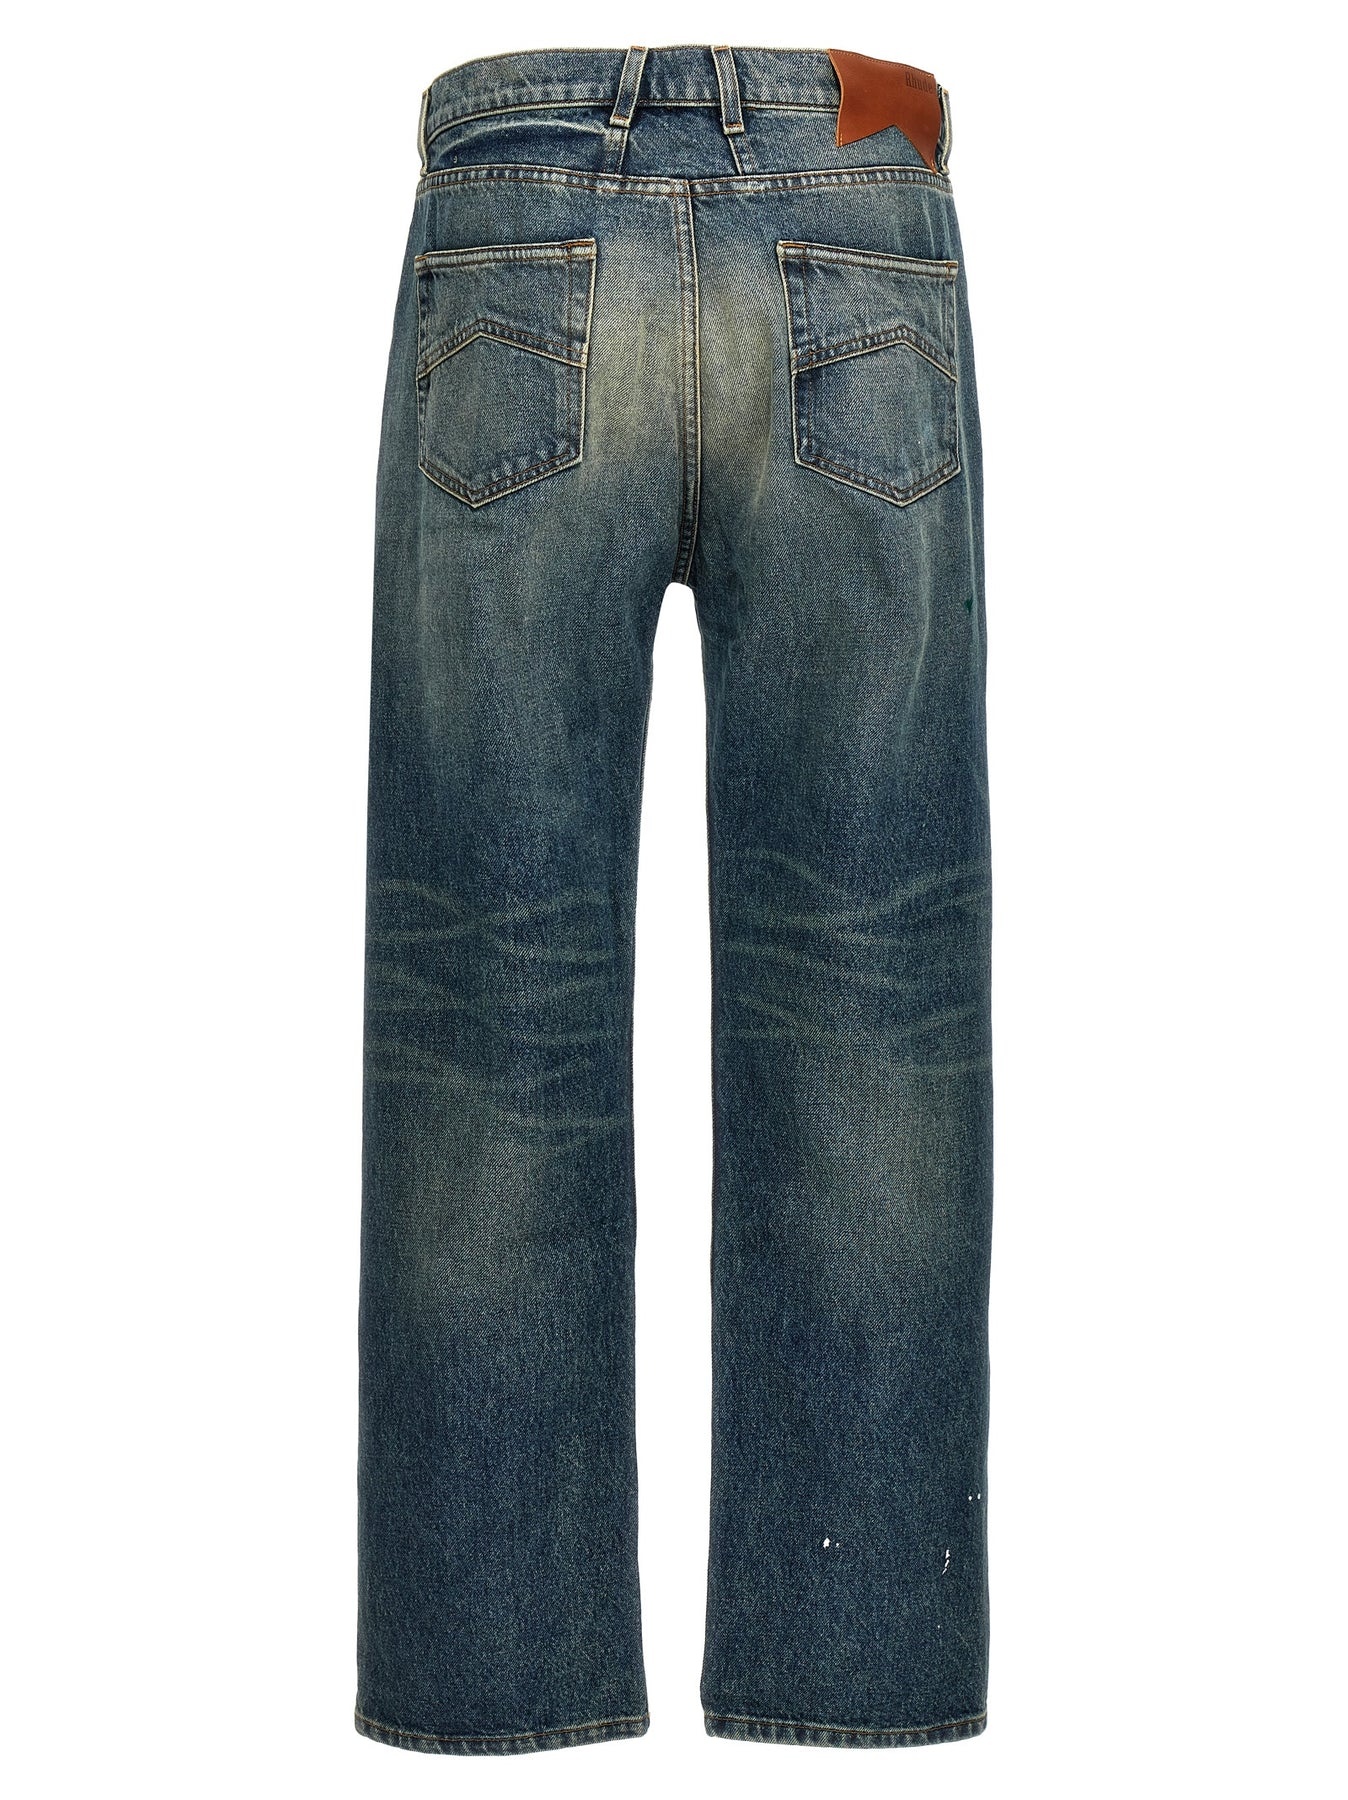 90s Jeans Blue - 2